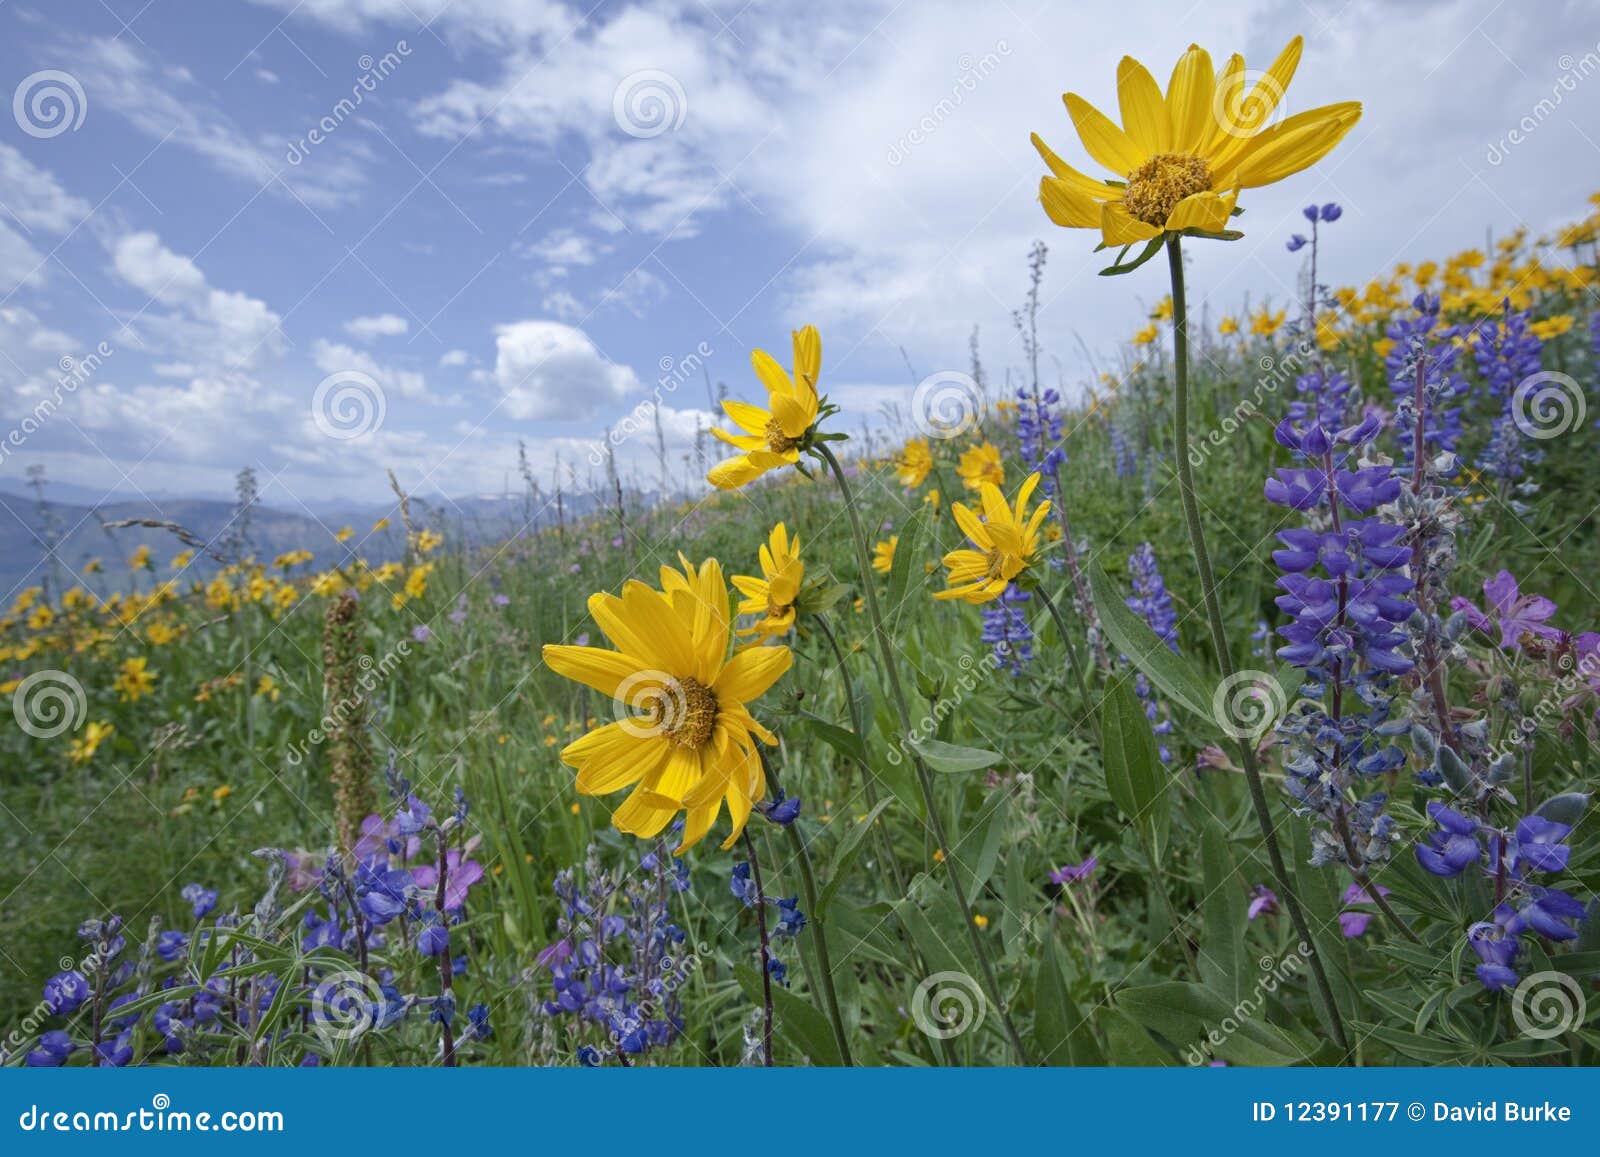 mountain wildflowers common sunflower blue sky flowers wildflower